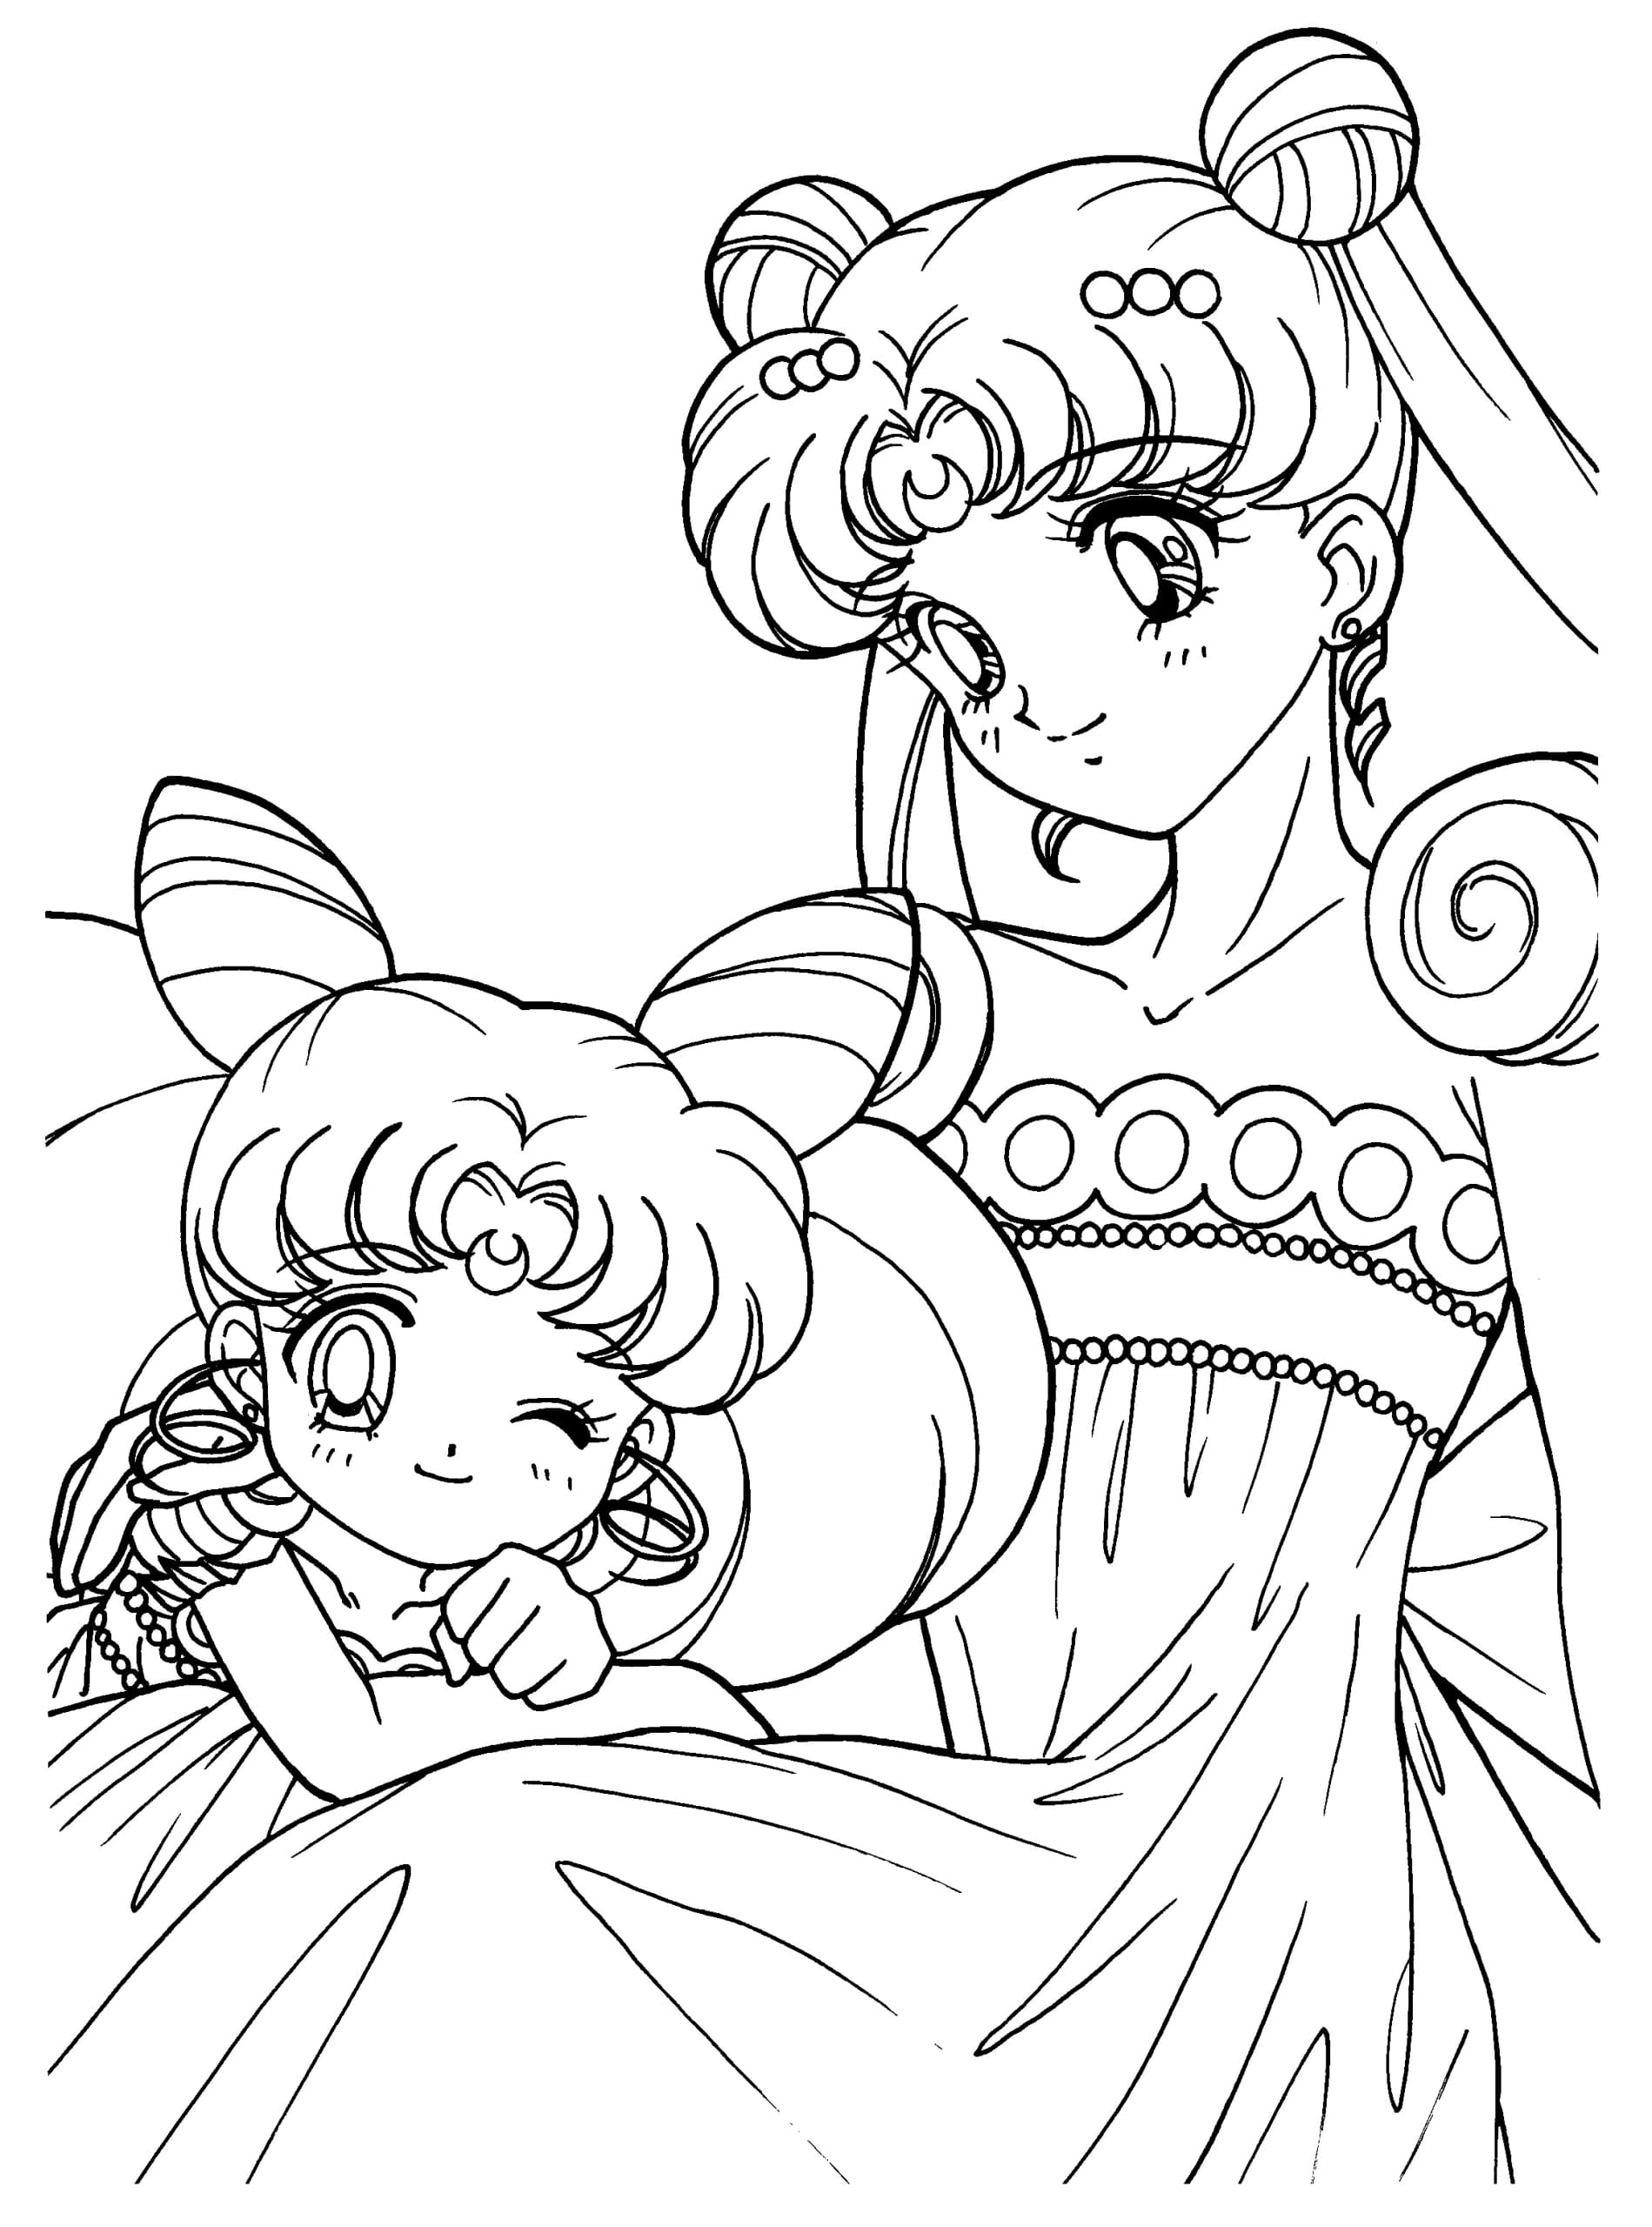 ausmalbilderkinder.de - Ausmalbilder Sailor Moon 12